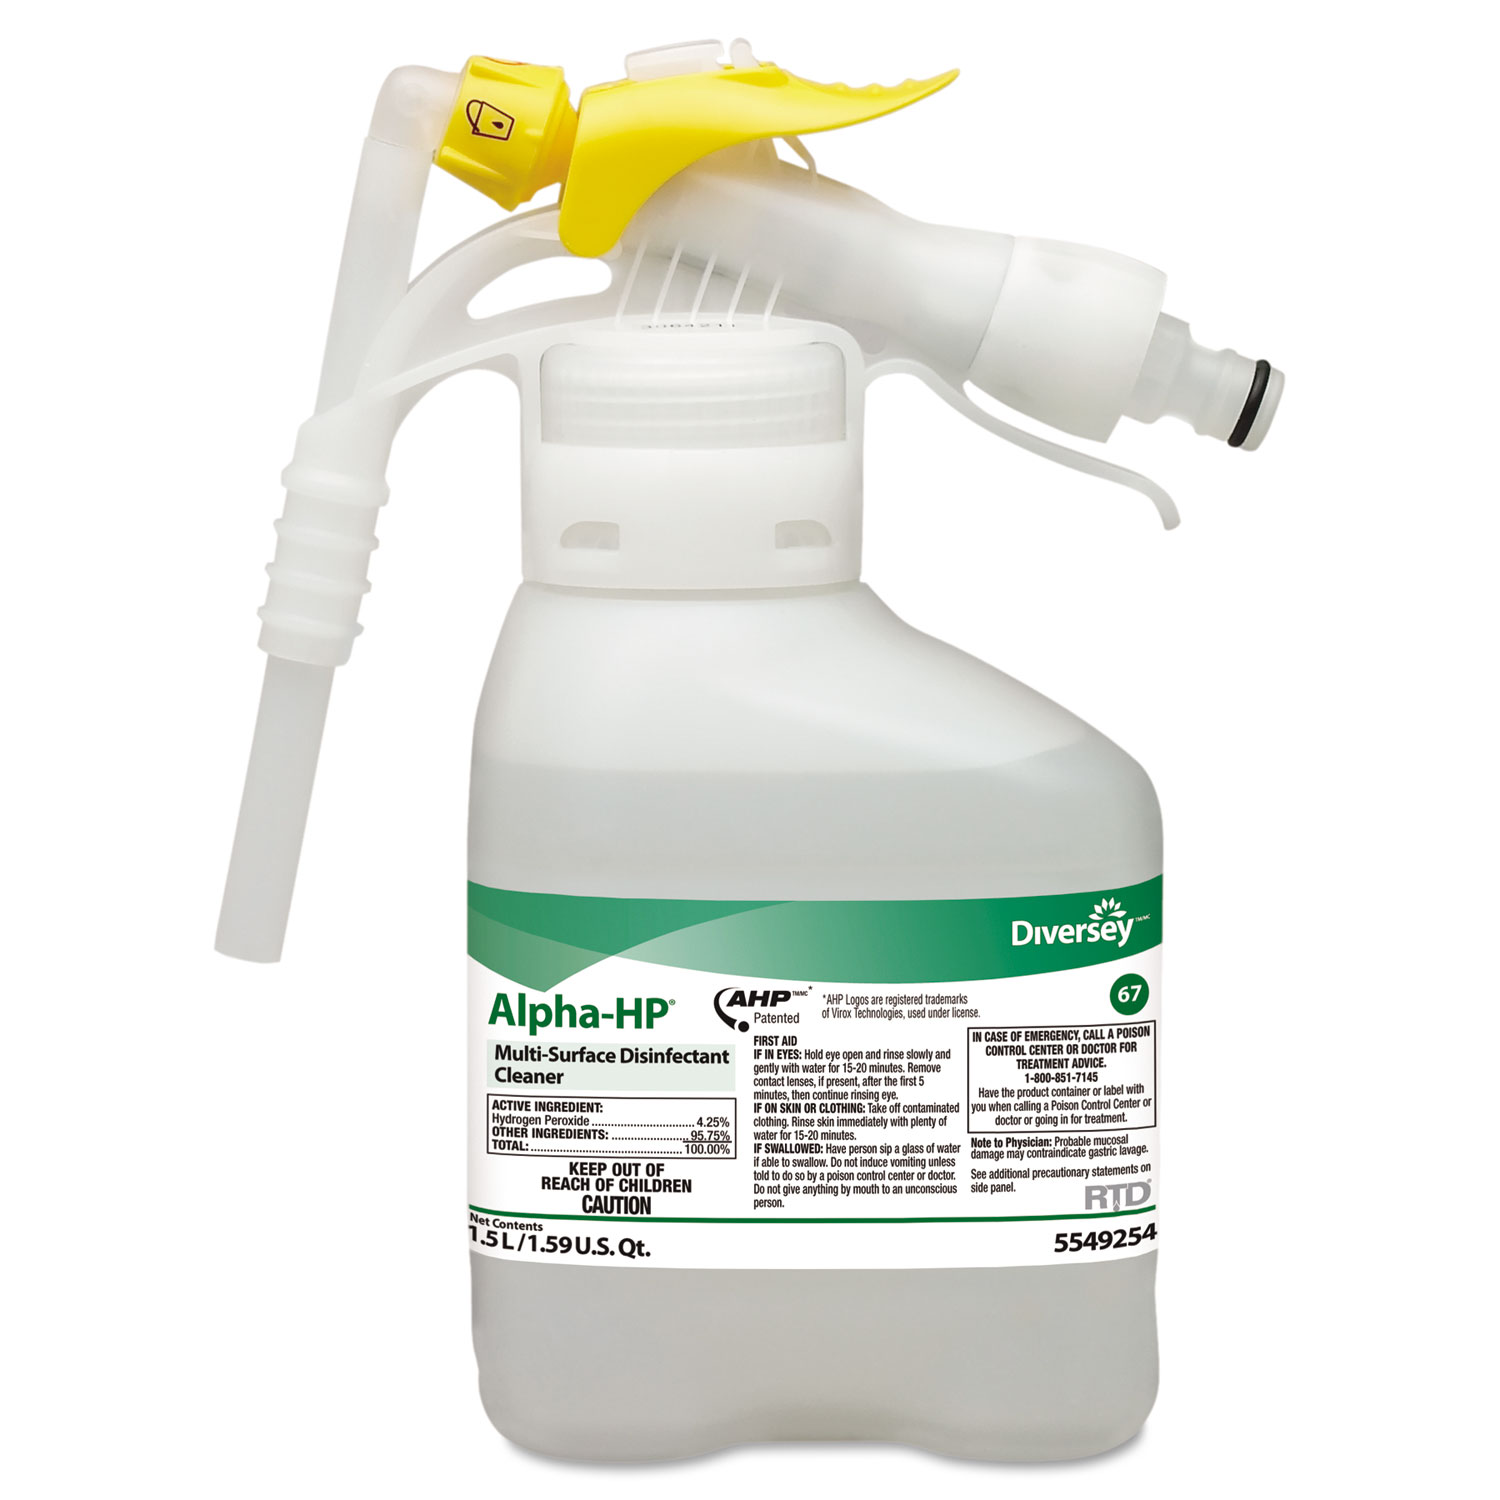  Diversey 5549254 Alpha-HP Multi-Surface Disinfectant Cleaner, Citrus Scent, 1.5L Spray Bottle UOM (DVO5549254) 